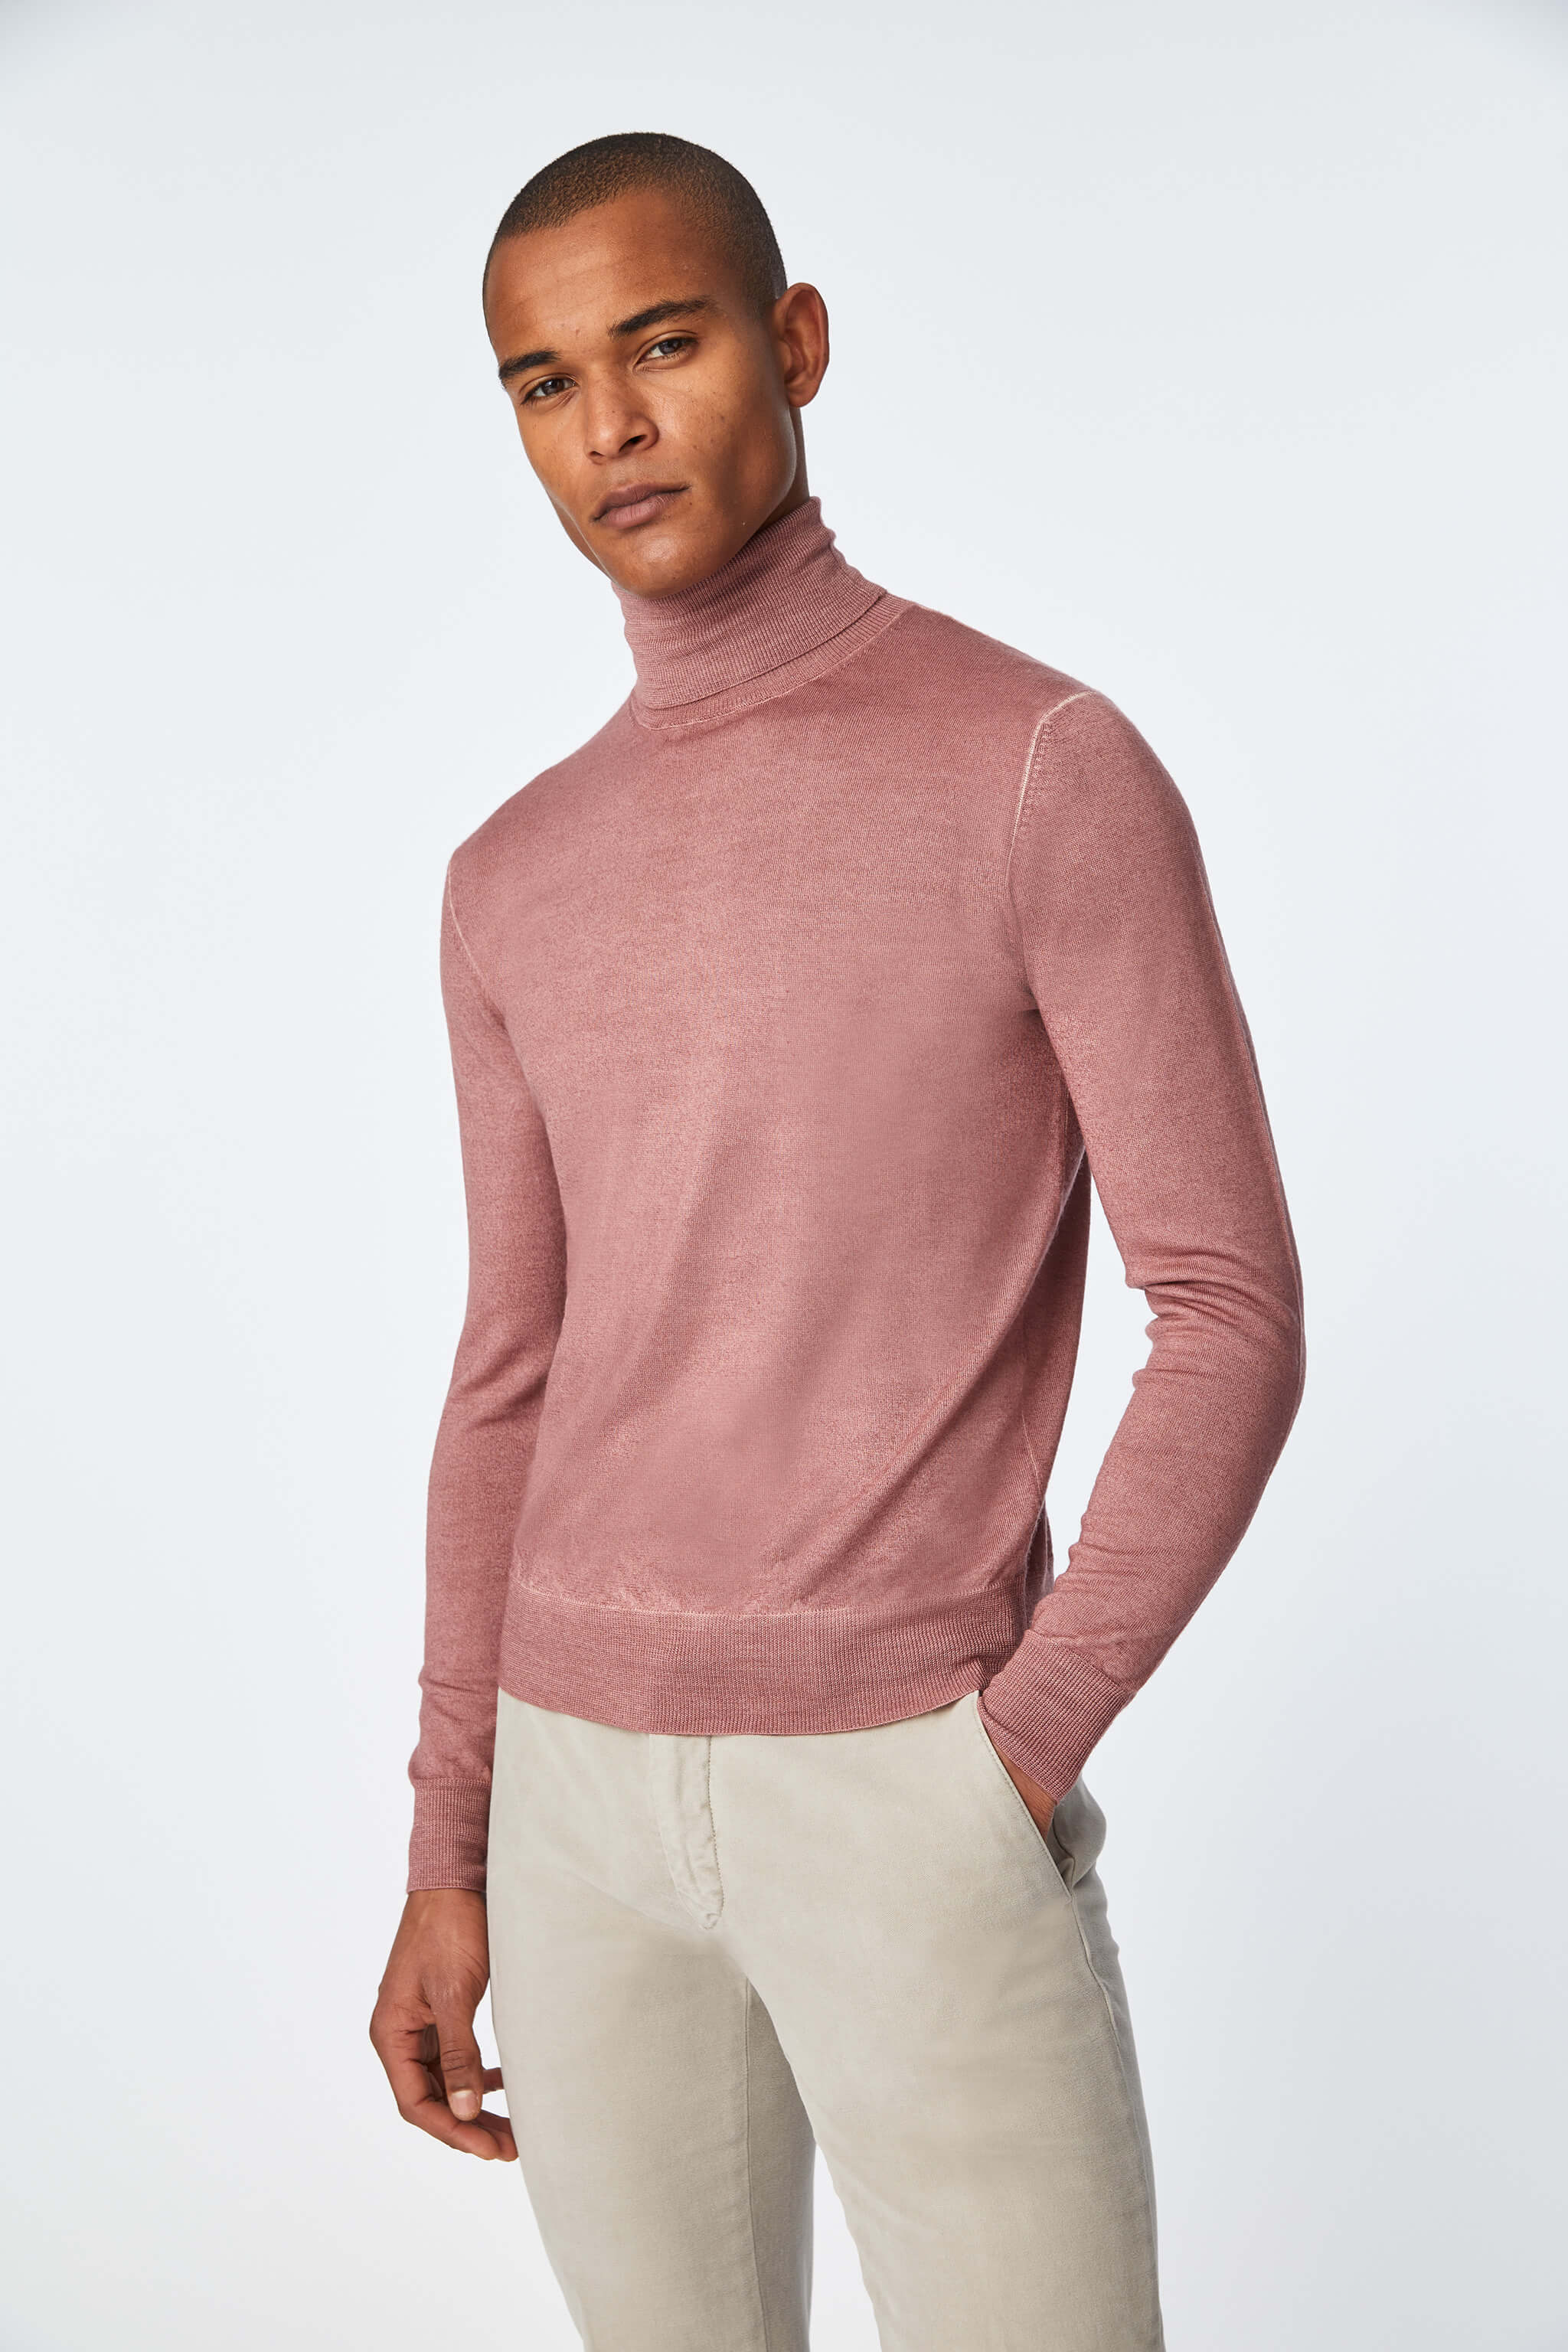 Garment-dyed pink turtleneck